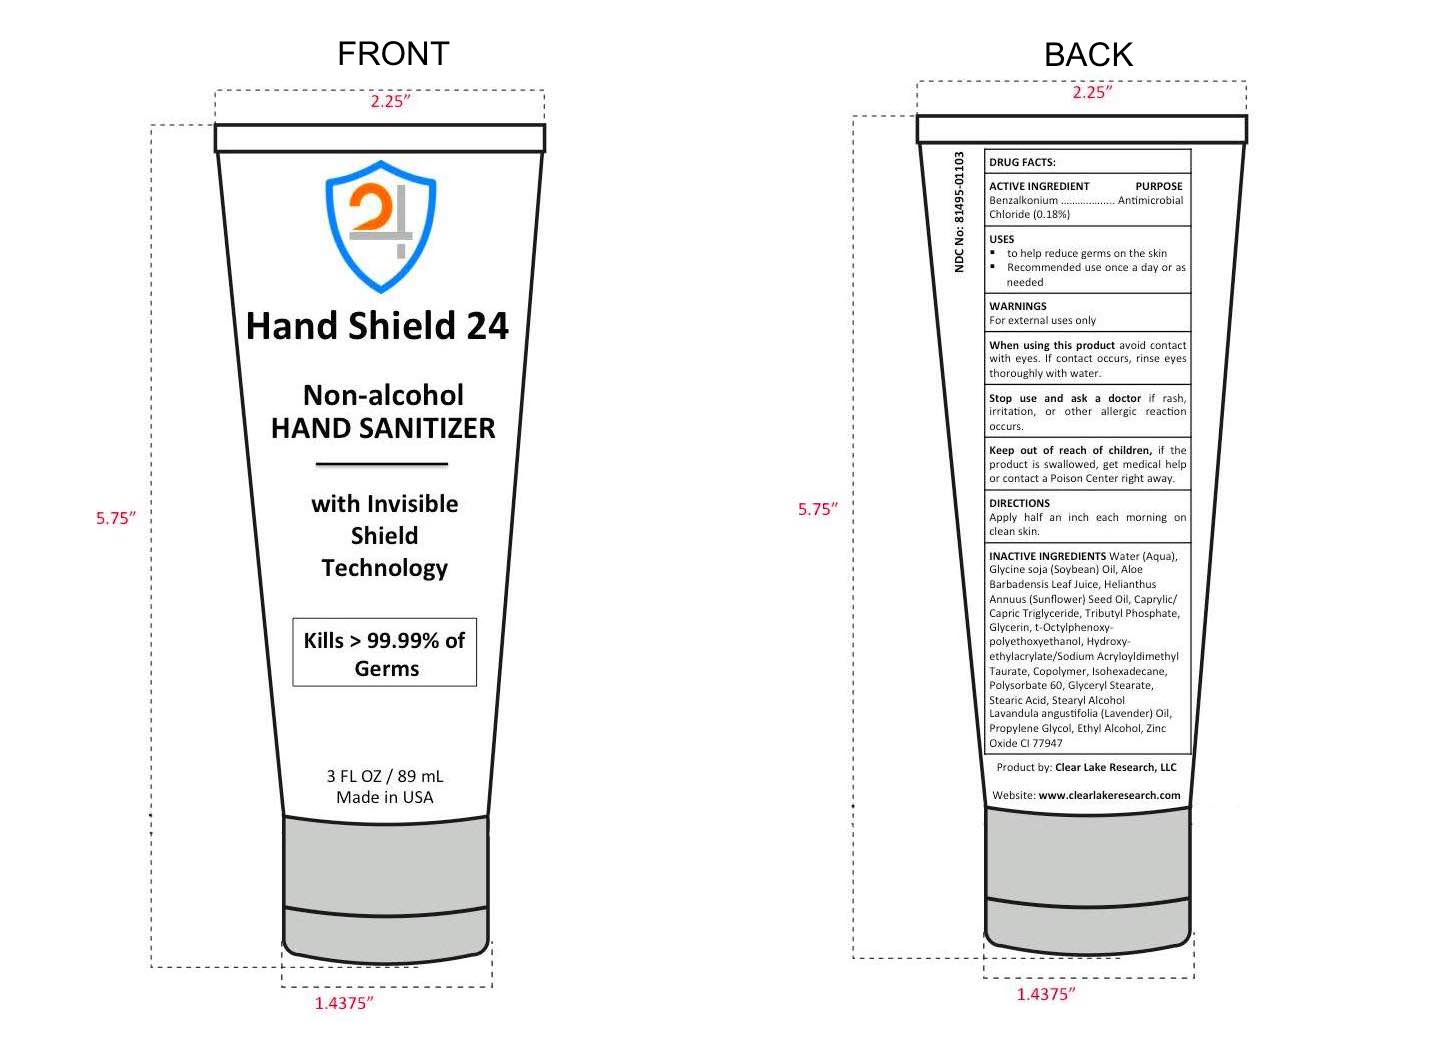 Hand Shield 24